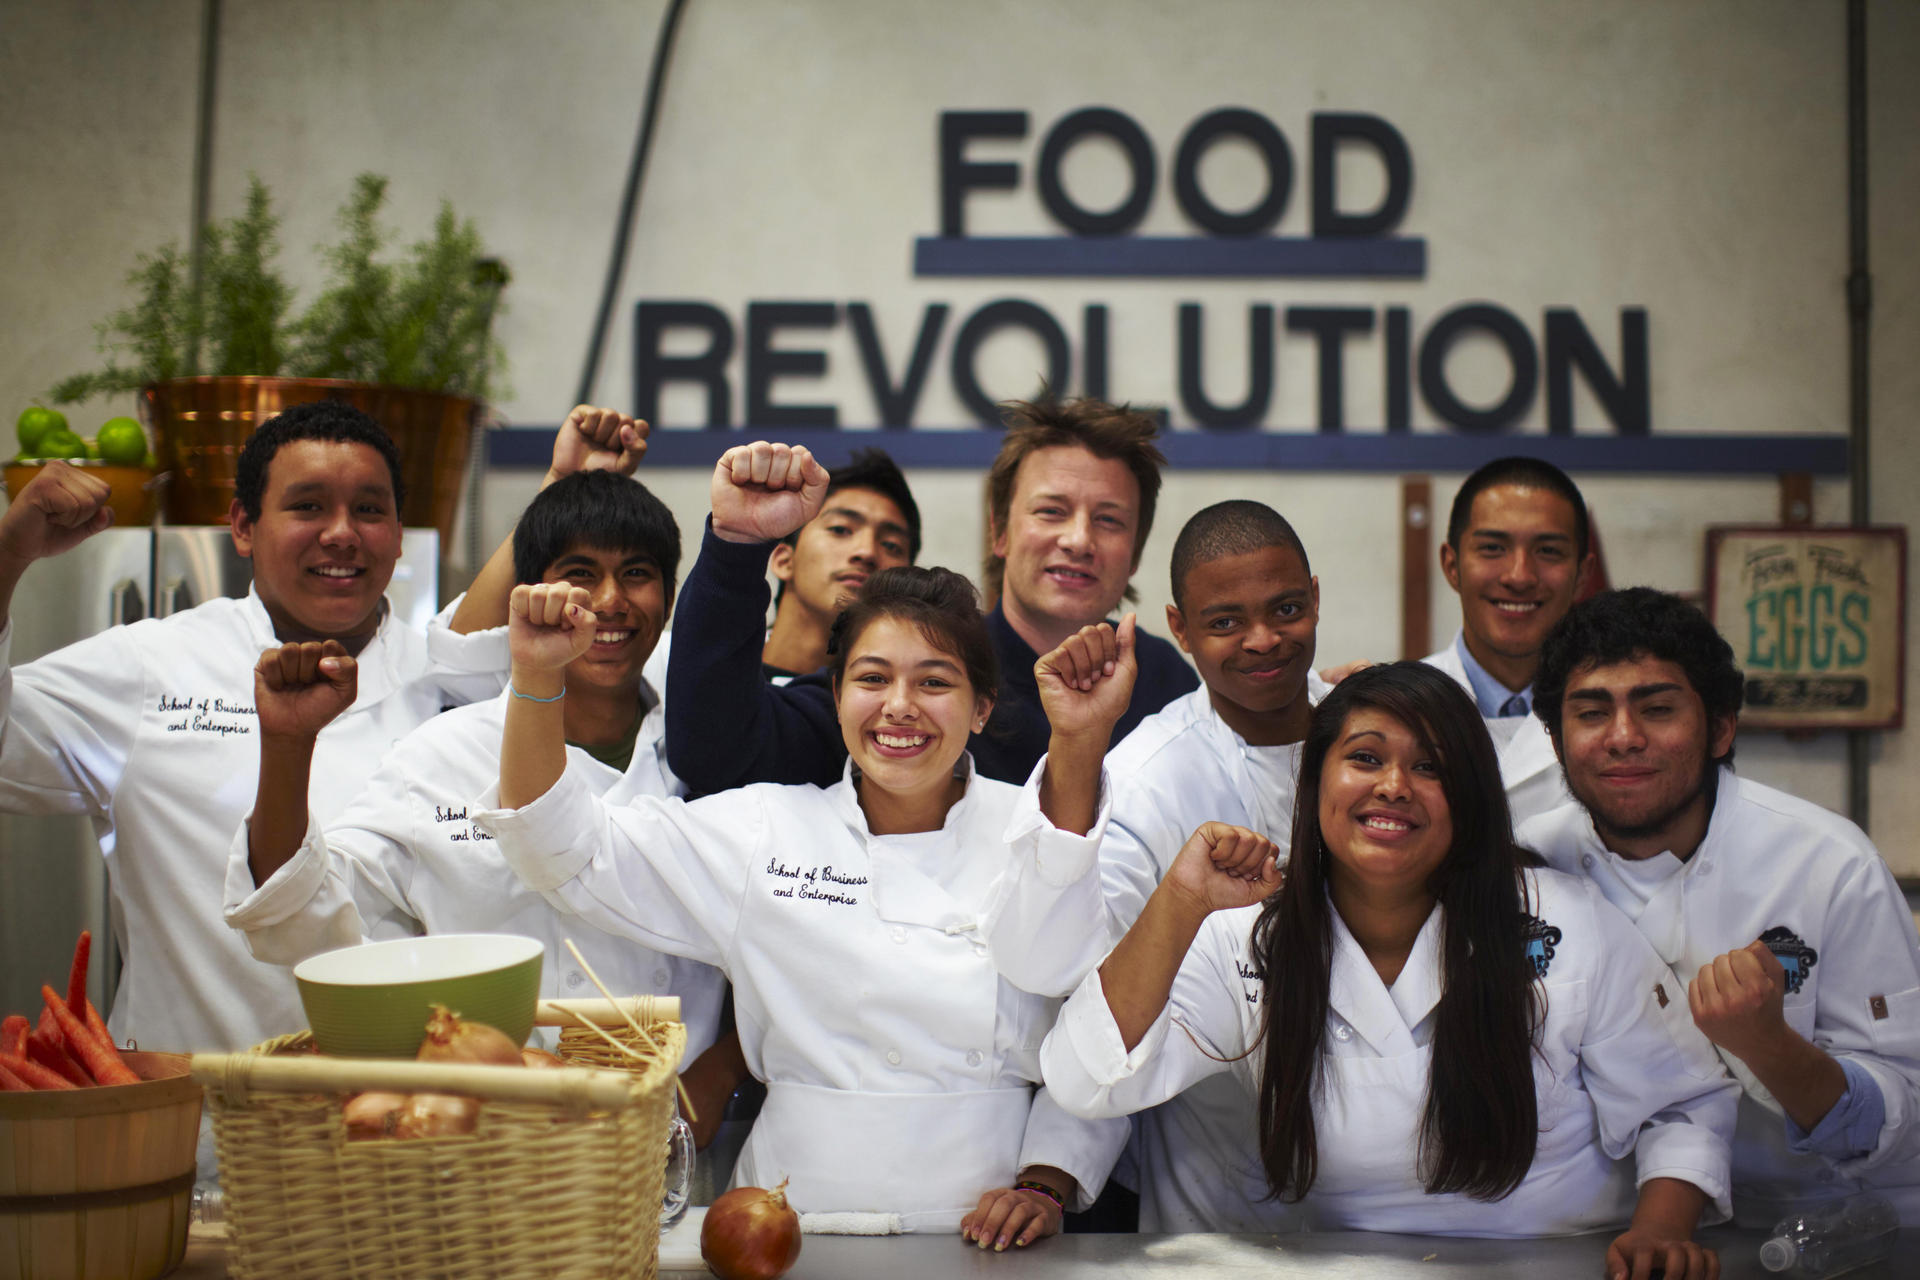 Jamie Oliver (left, centre) launched the Food Revolution. Photo: David Loftus